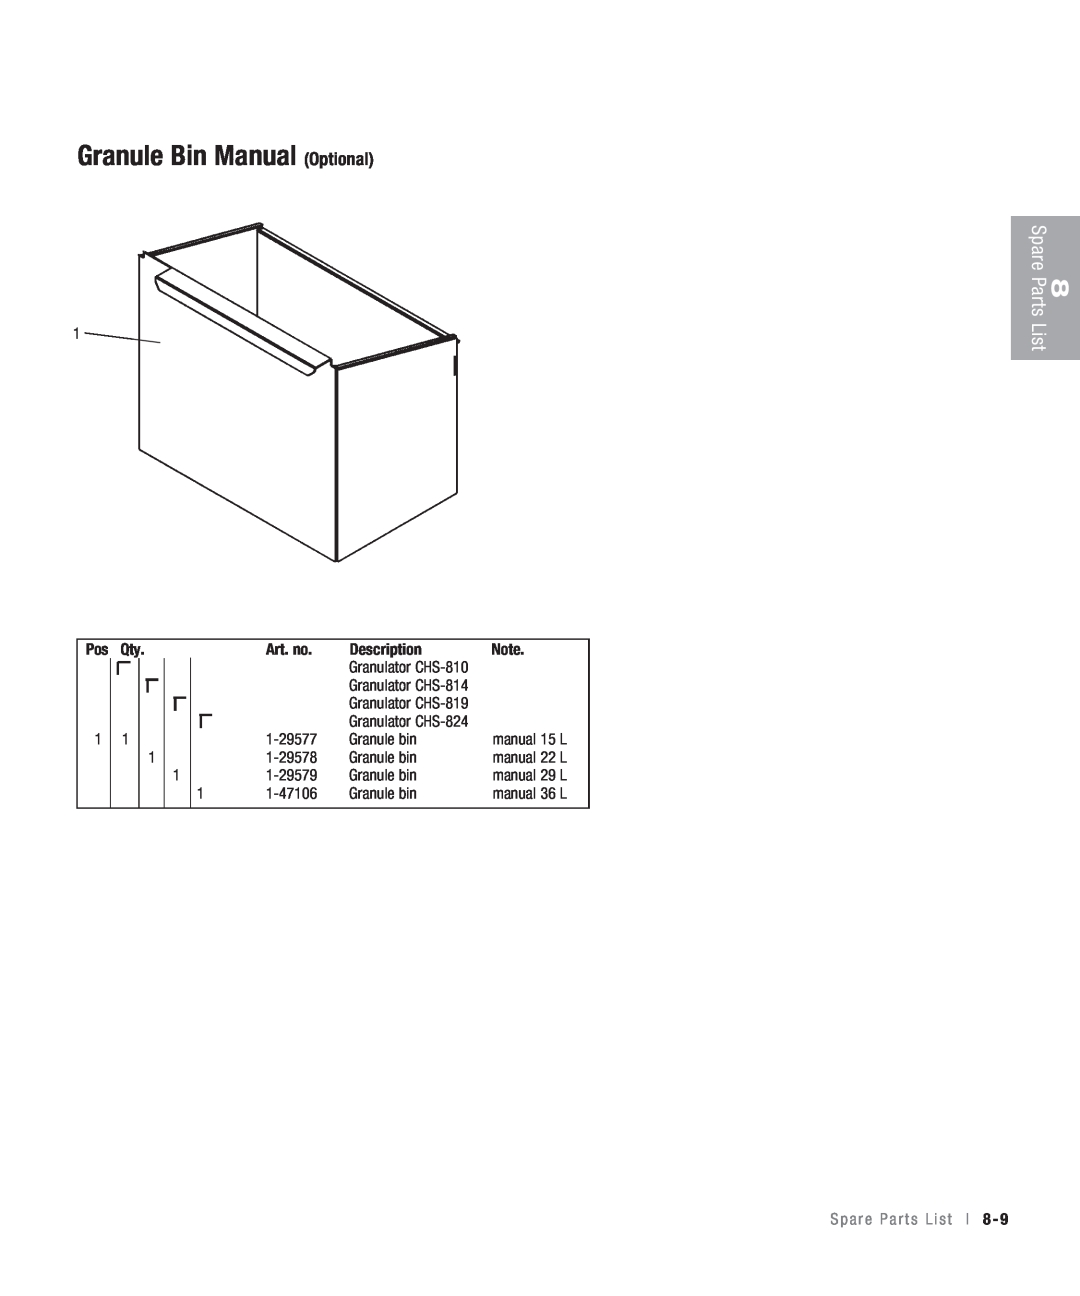 Conair CHS-810 manual Granule Bin Manual Optional, Art. no, Description, Spare Parts, List, S p a r e P a r t s L i s t l 8 